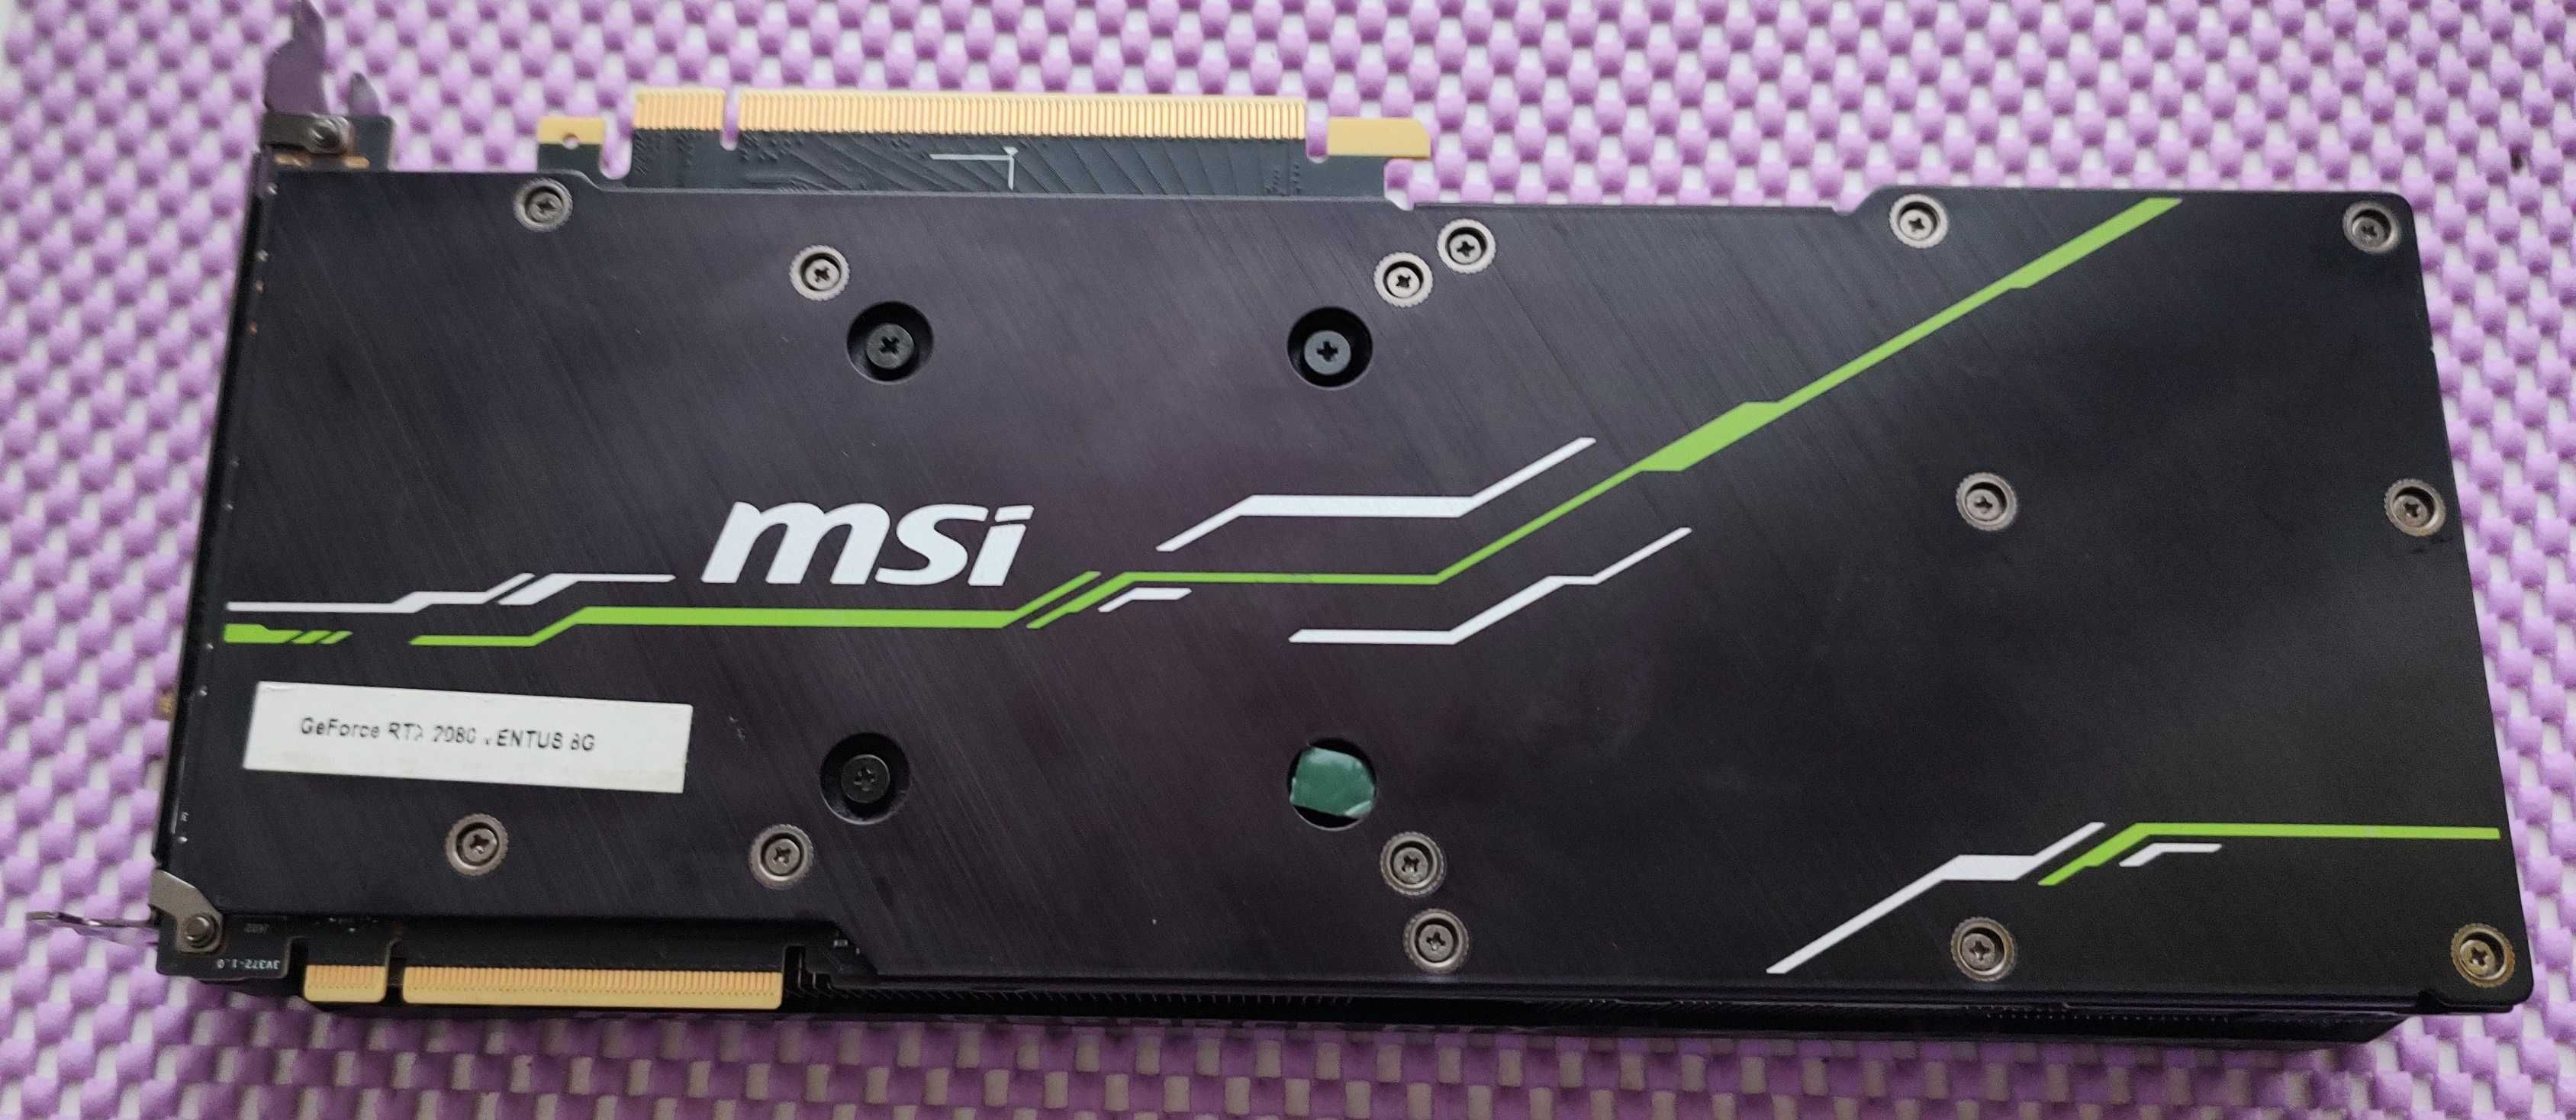 MST GeForce RTX 2080 VENTUS 8Gb